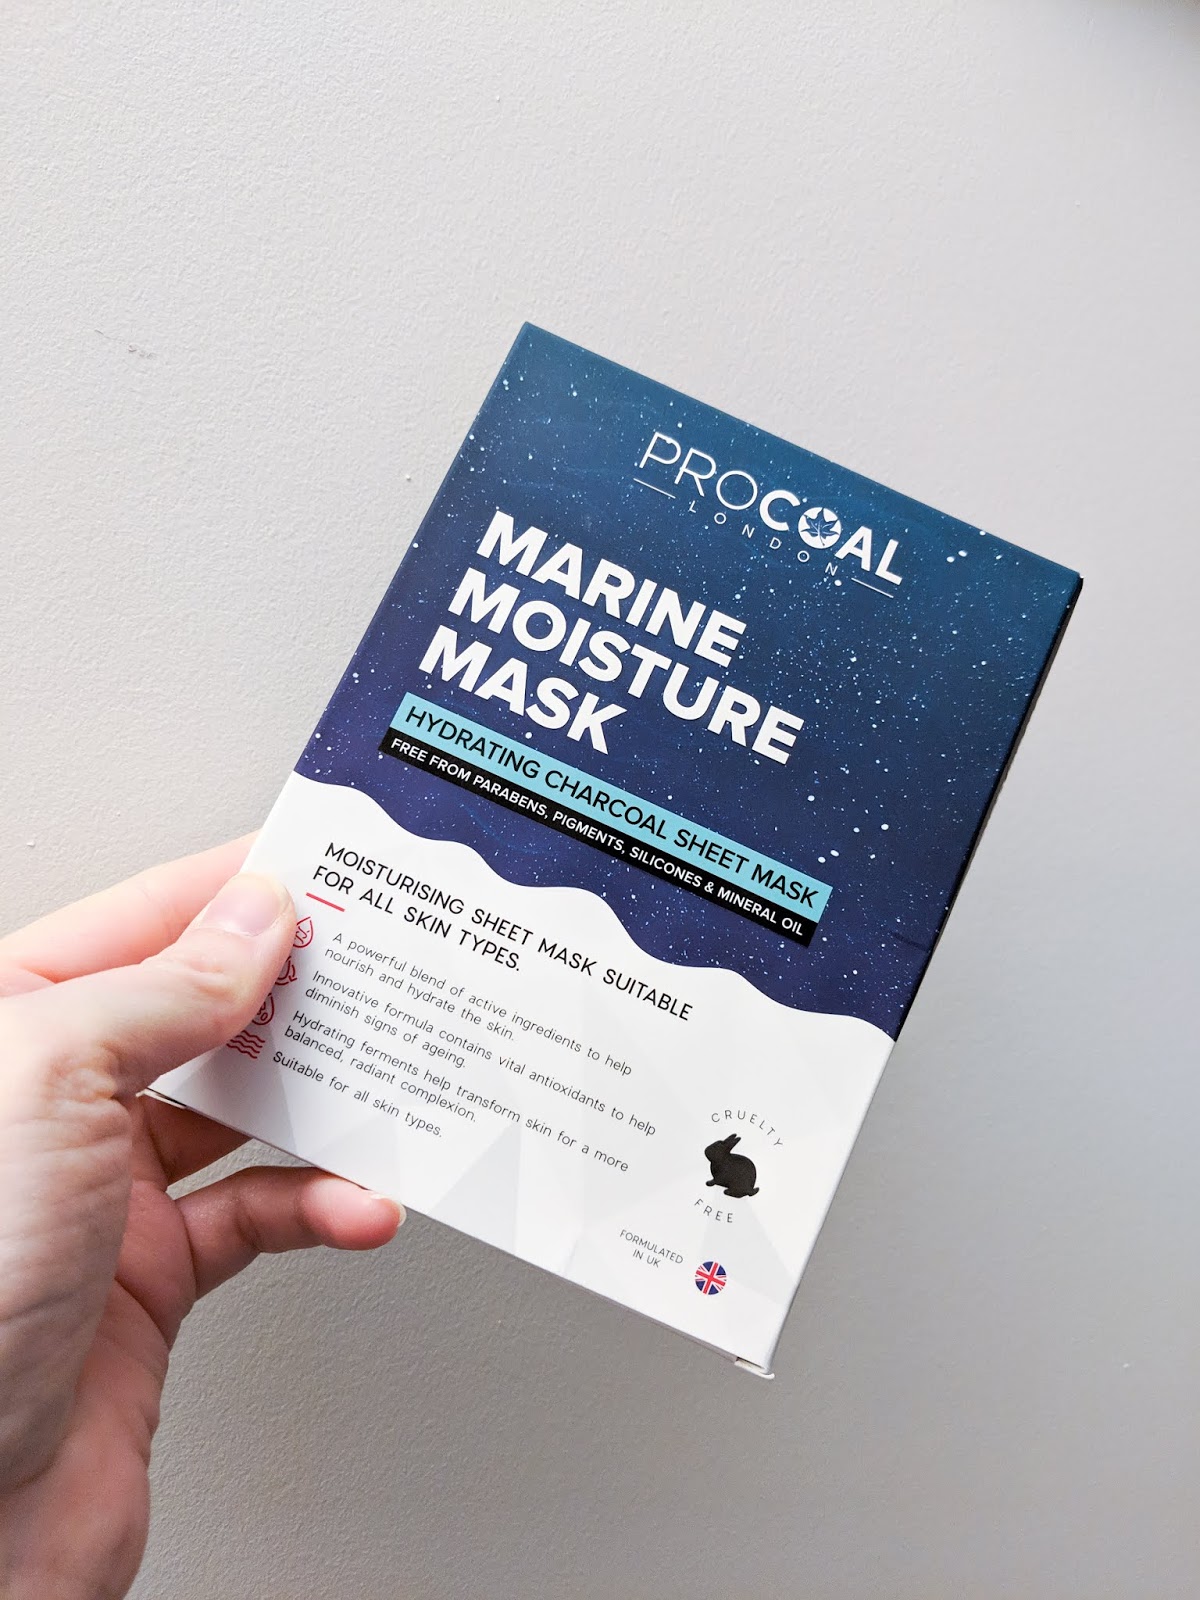 Procoal_marine_moisture_mask